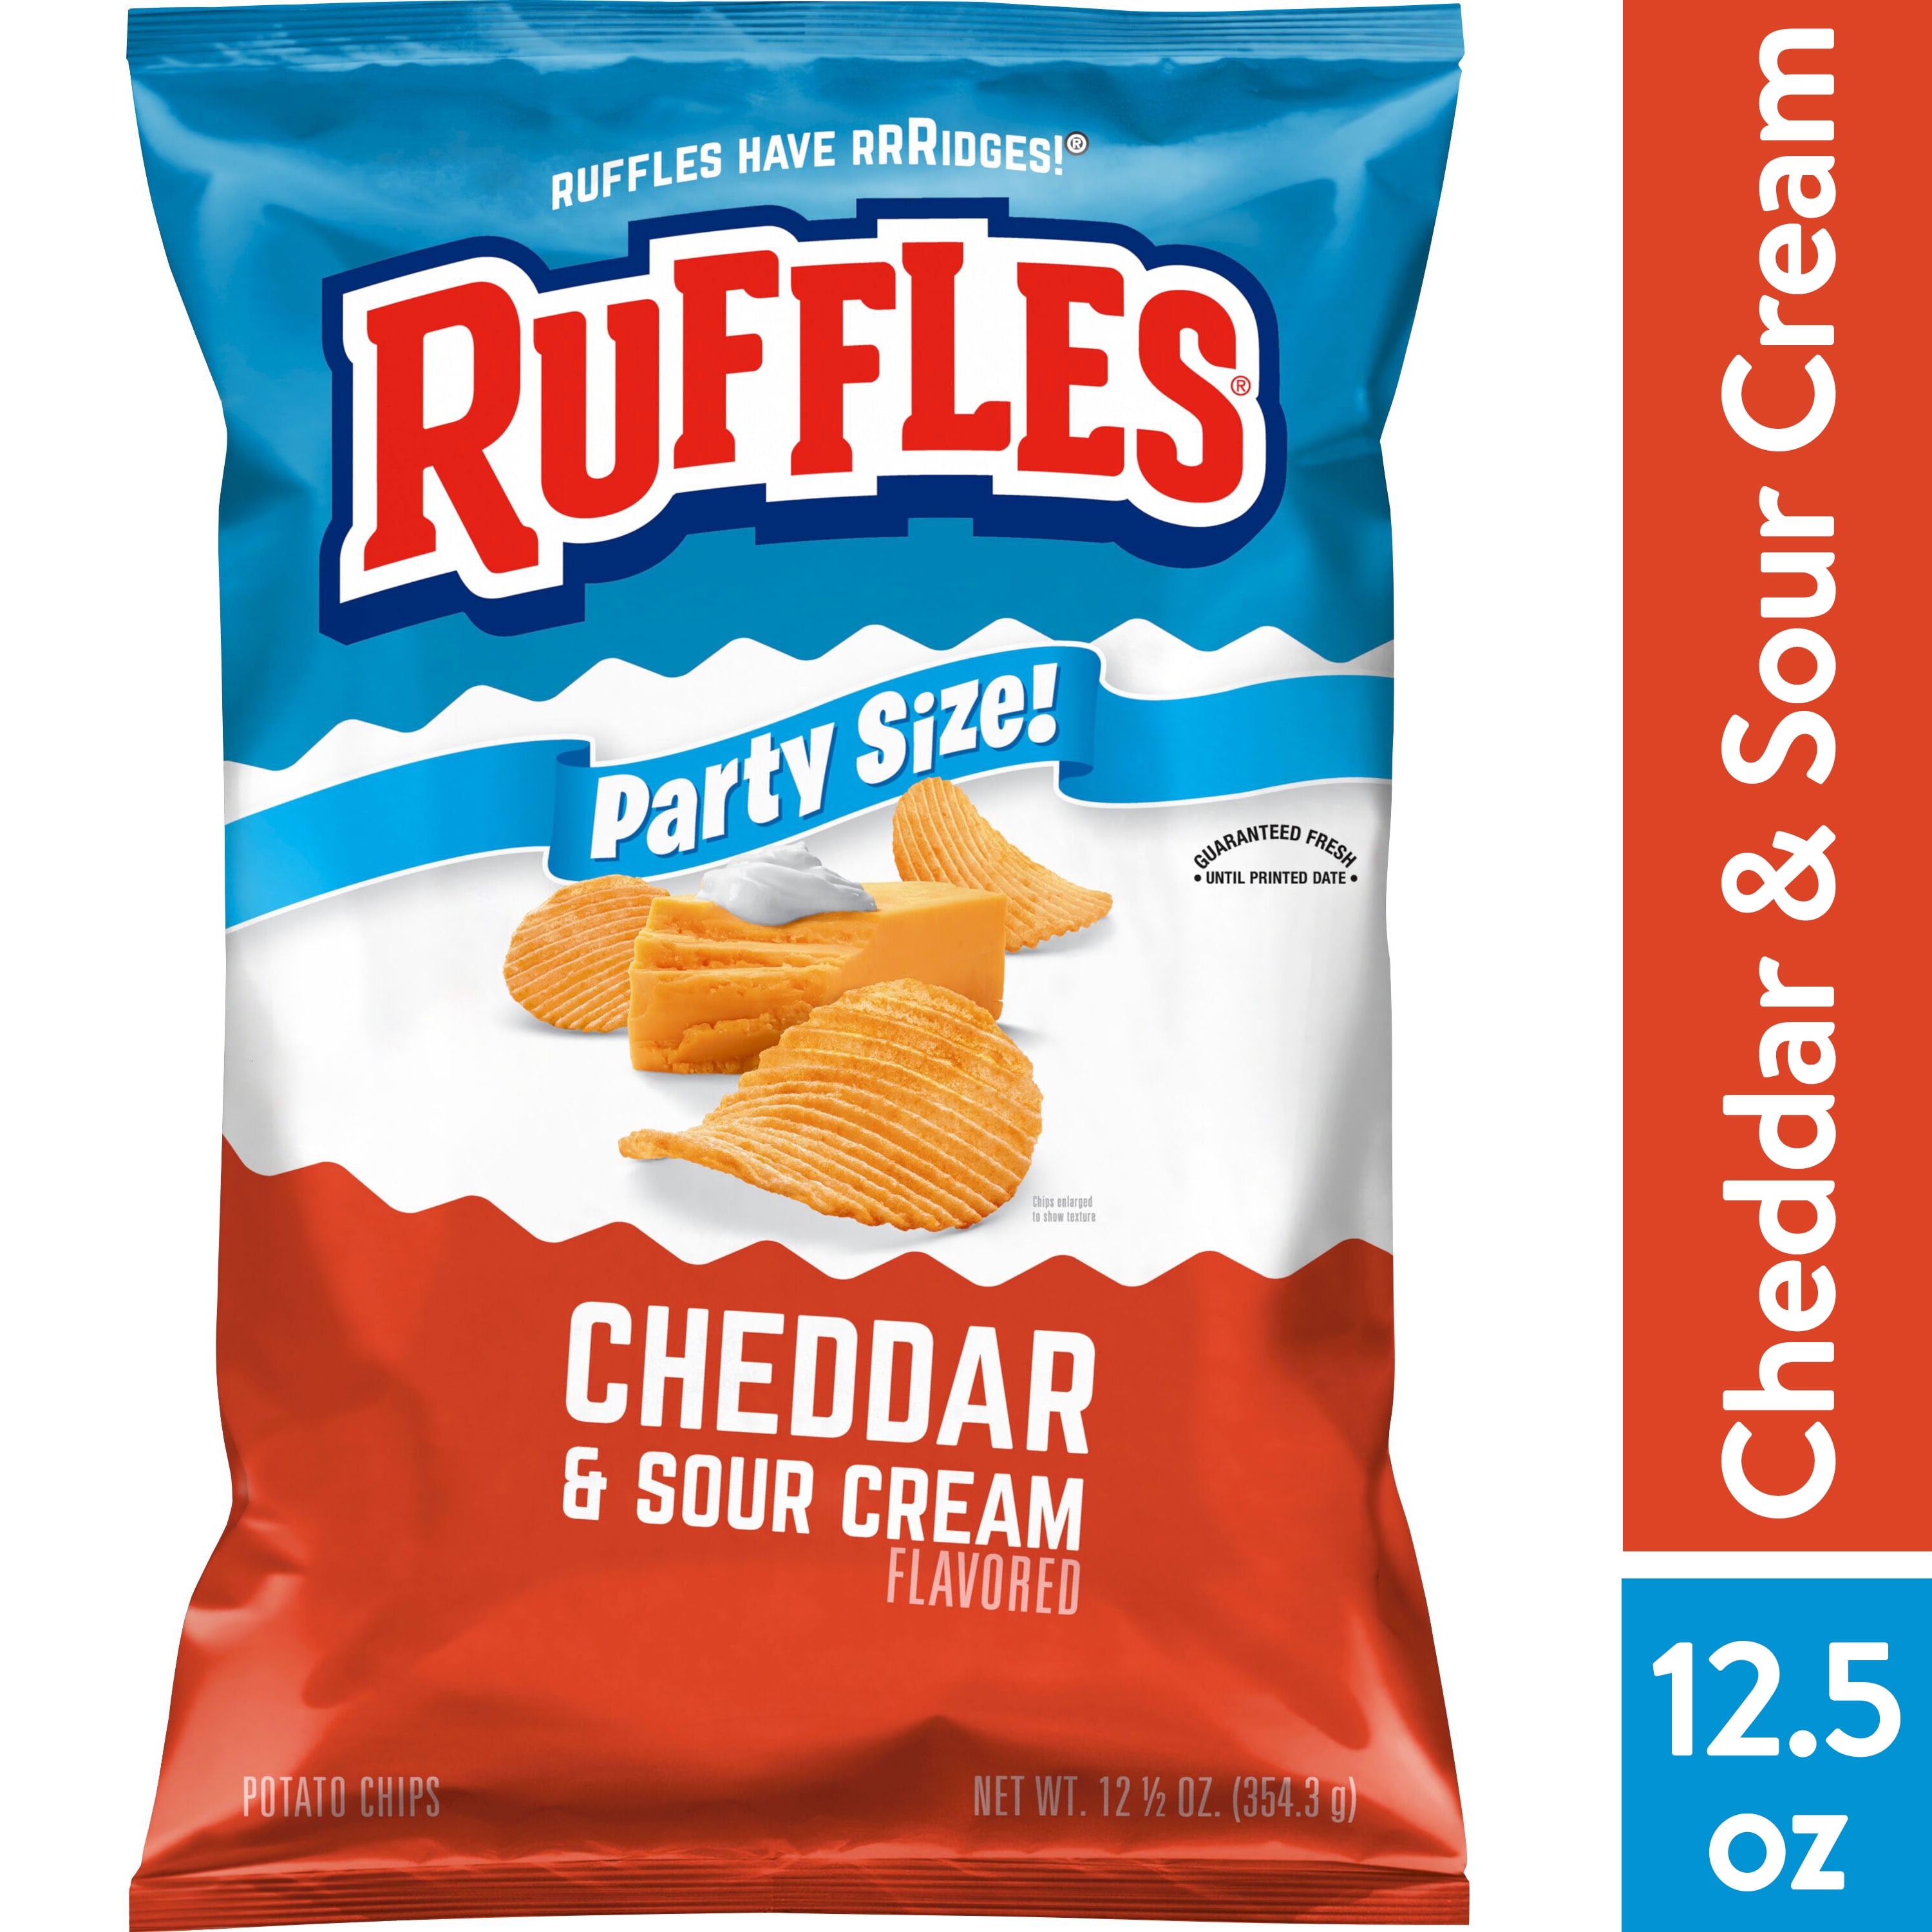 Ruffles Potato Chips Cheddar & Sour Cream Flavored, 12.5 oz